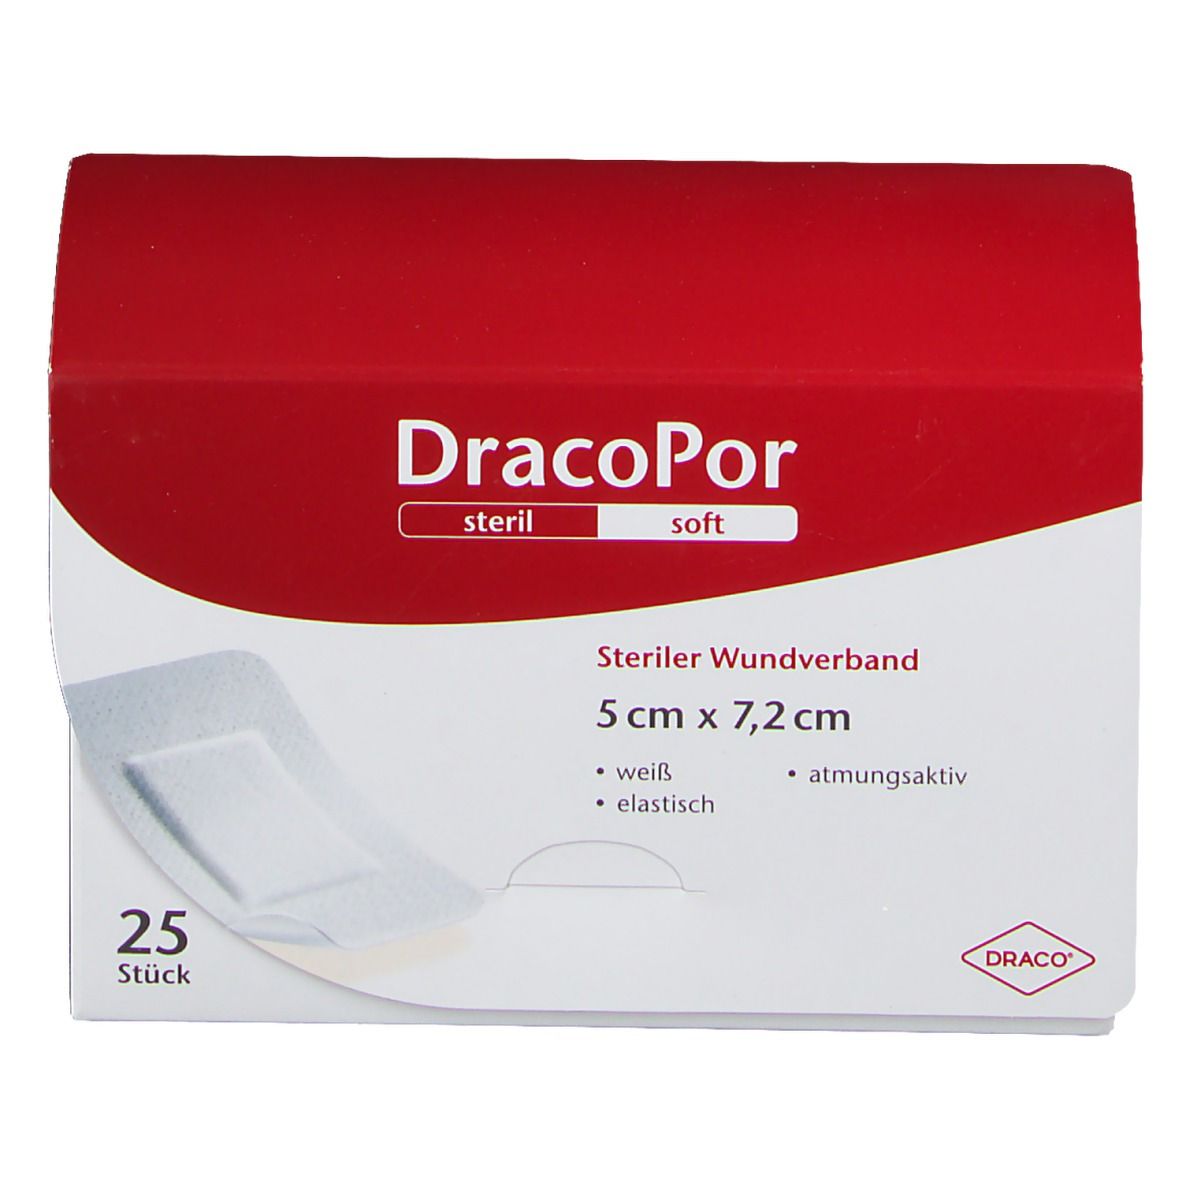 DracoPor Wundverband Soft weiß steril  7,2 x 5 cm